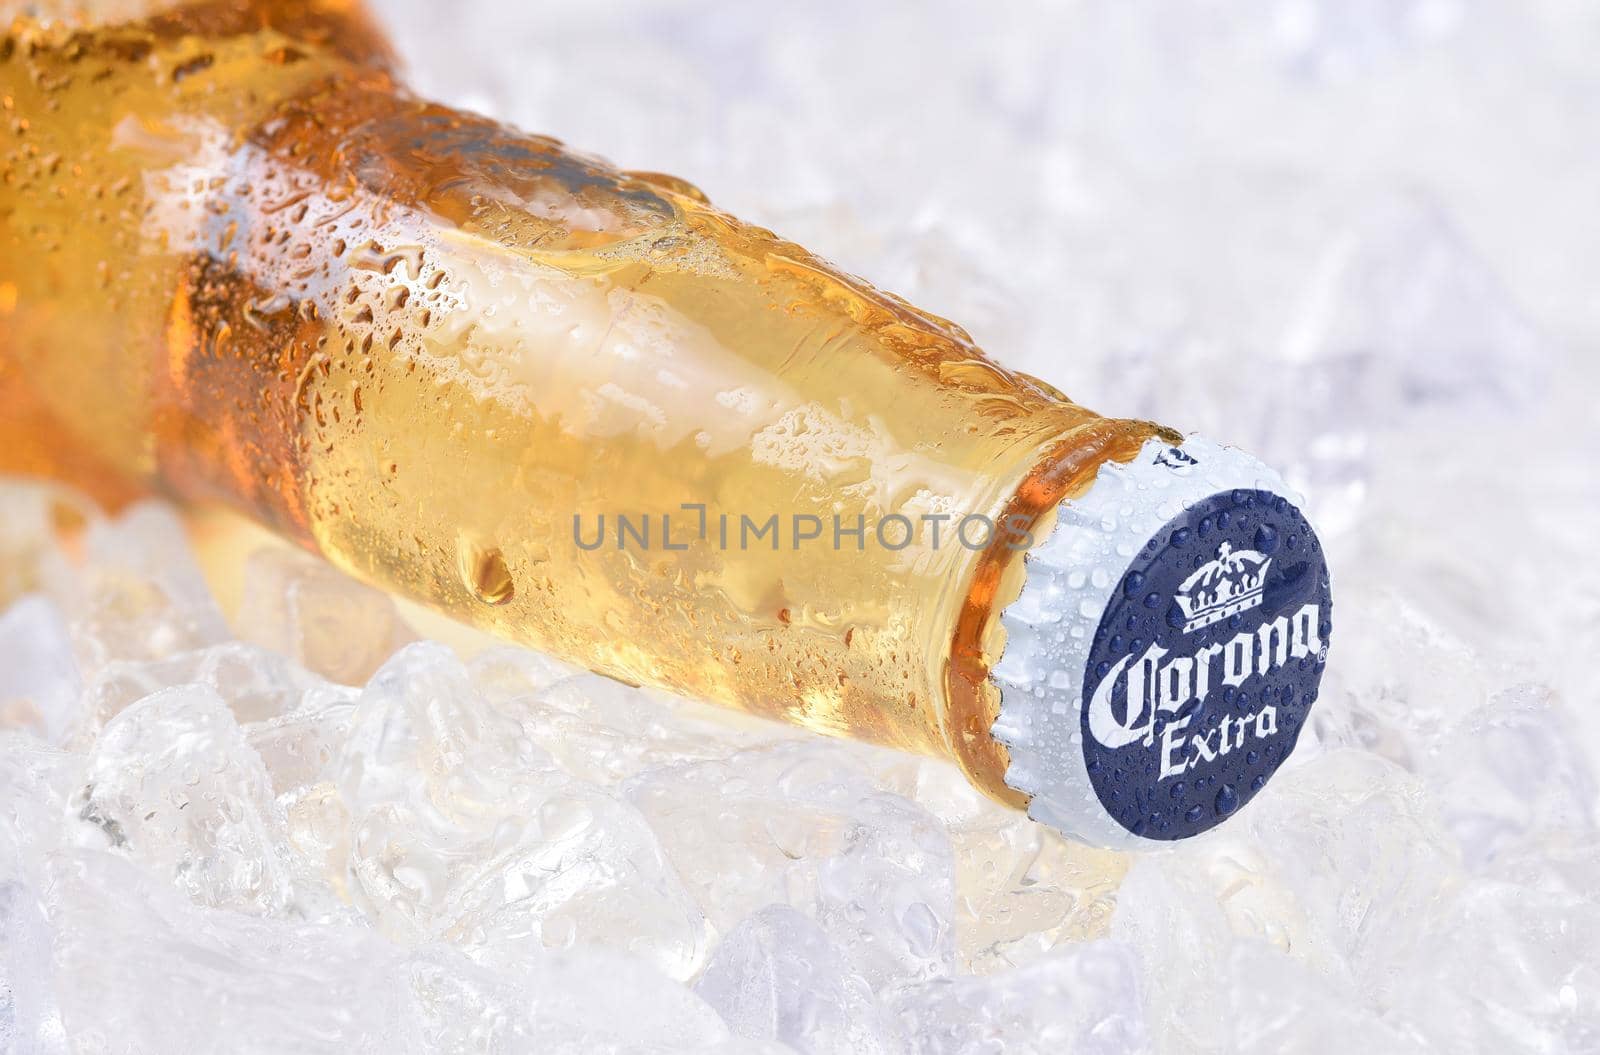 Corona Extra Beer Bottle on Ice by sCukrov